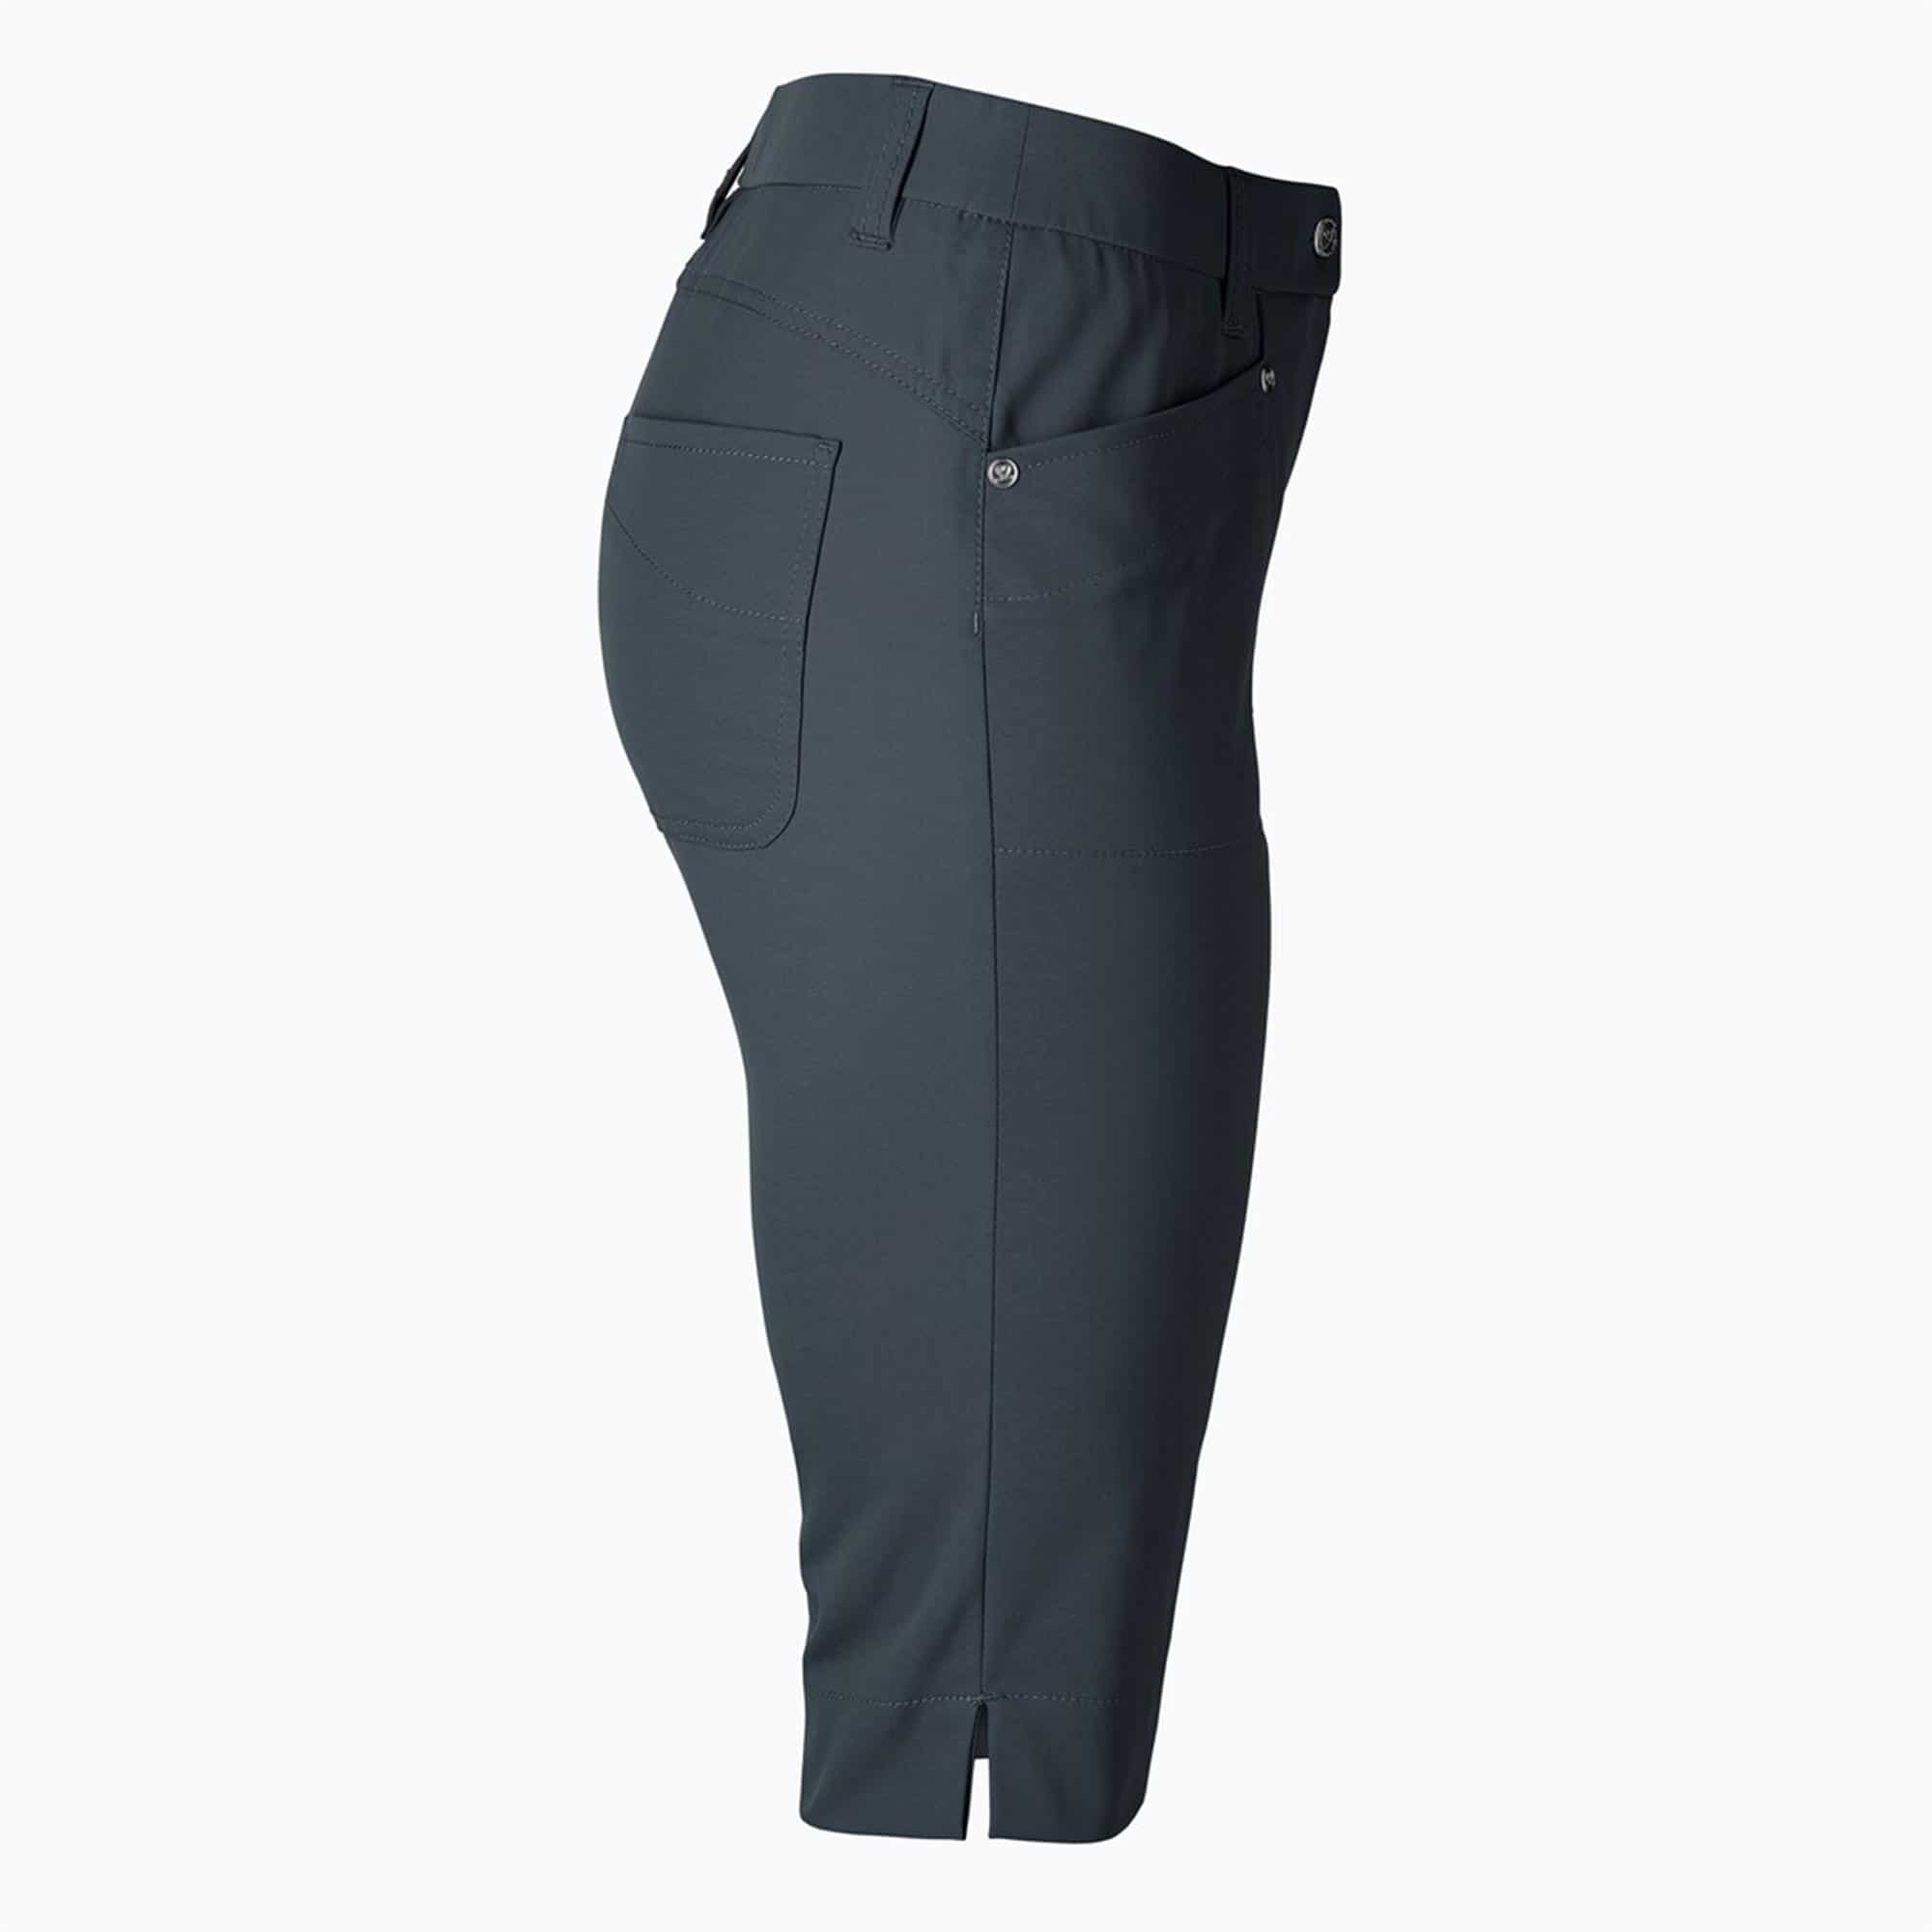 Ladies Golf Pants Pockets, Daily Sports Women Golf Pants